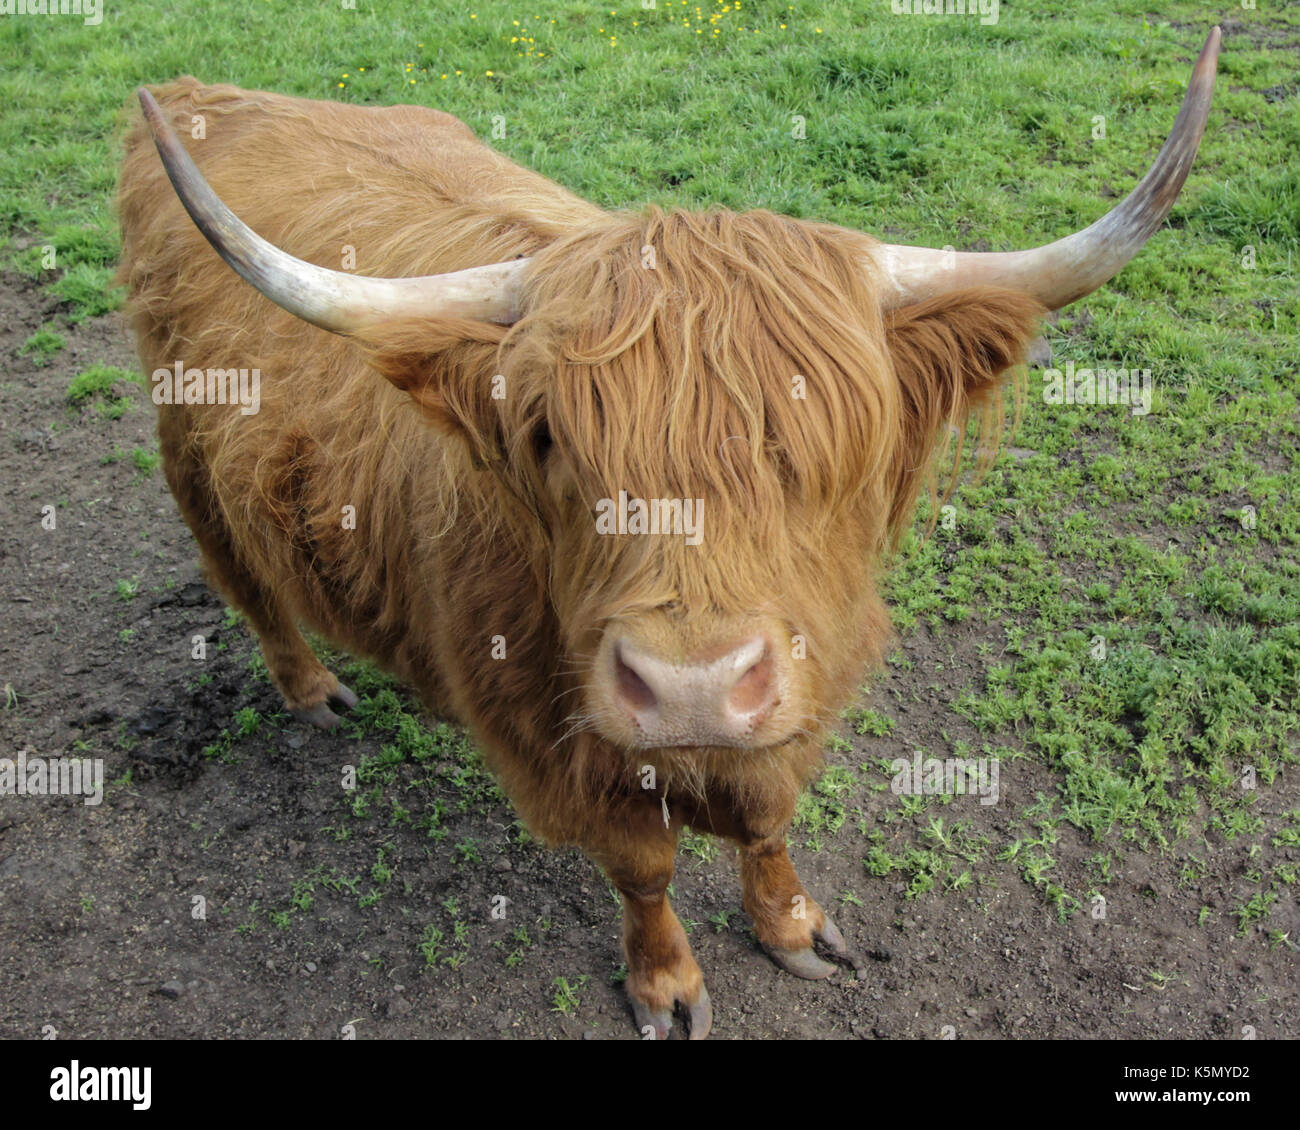 Highland ganado ganadería vacas cow buffalo Escocia uk Foto de stock